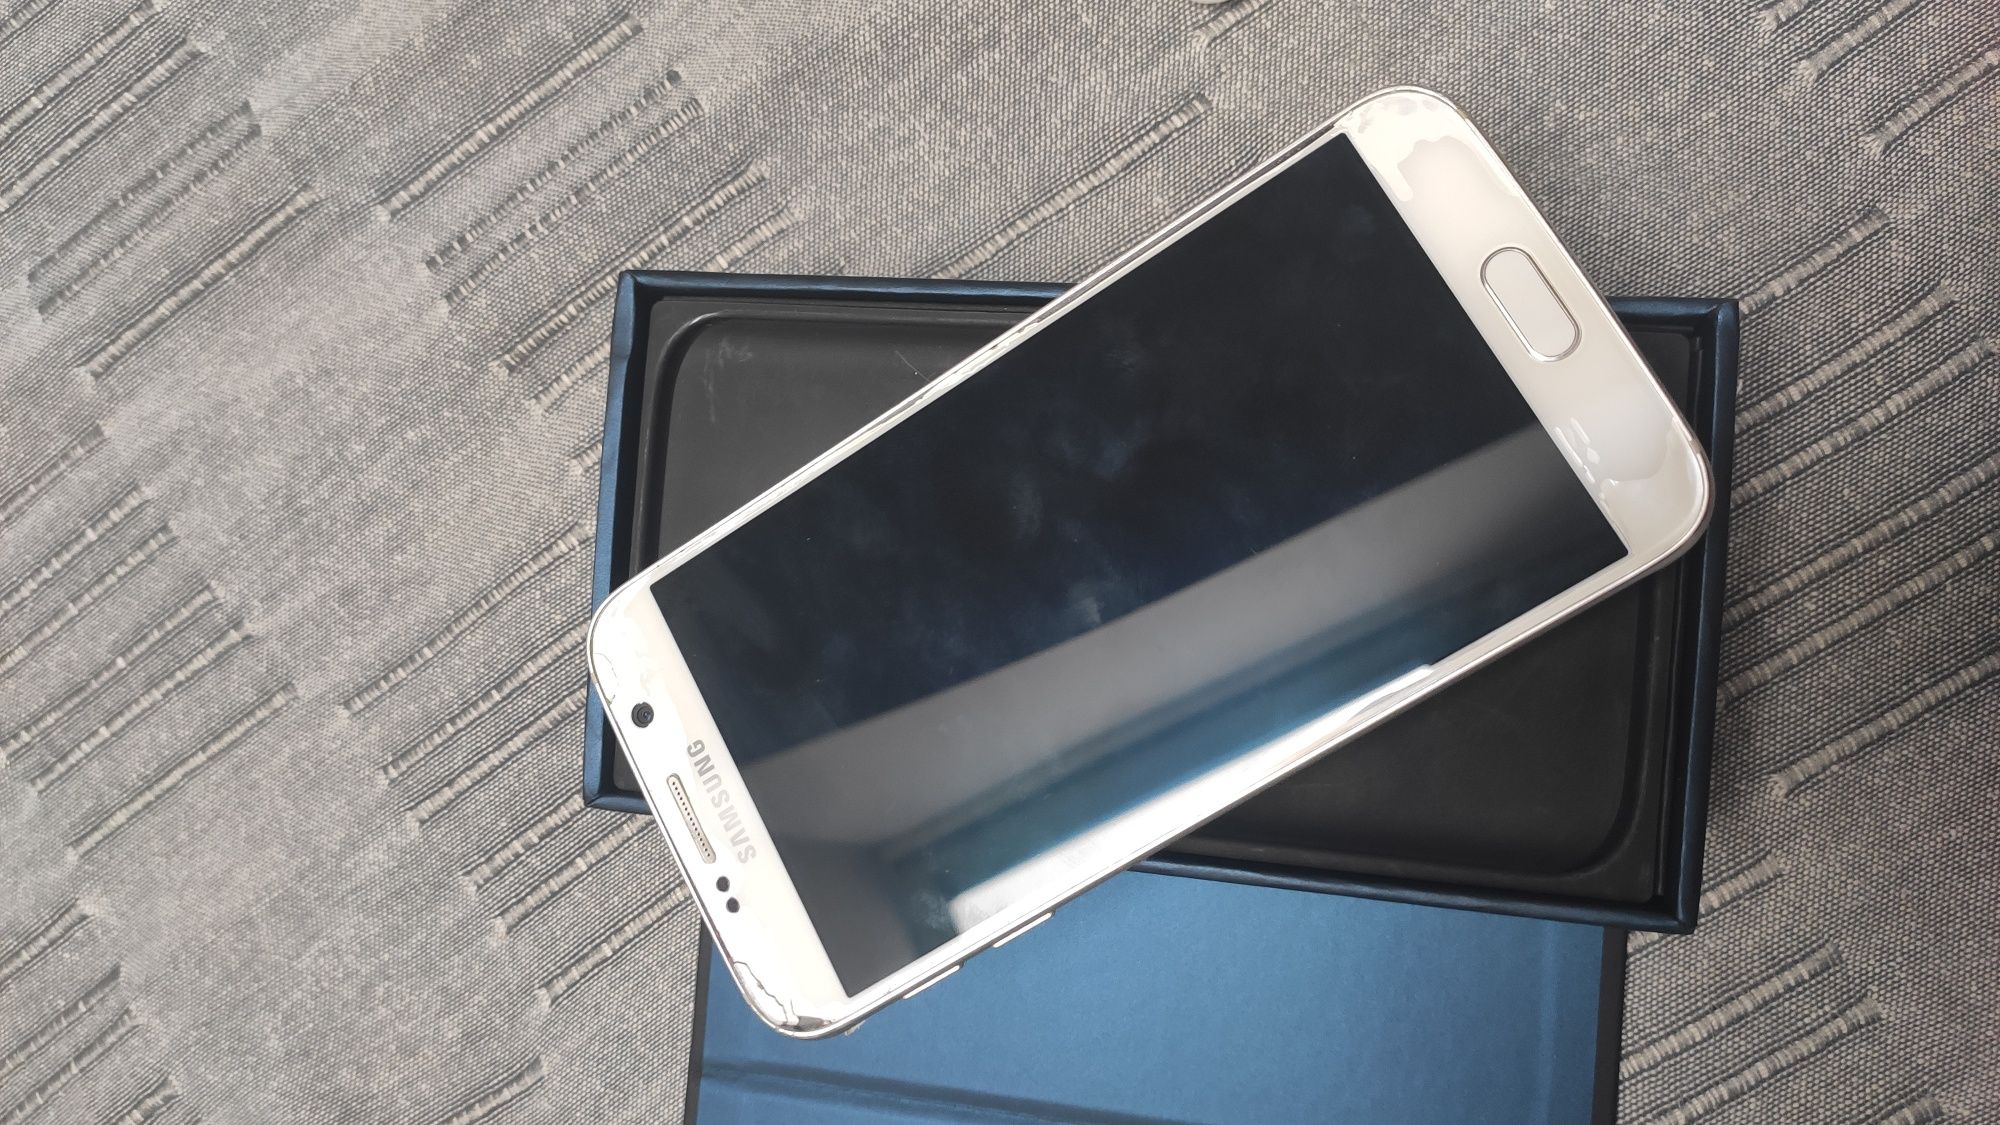 Pudełko Samsung Galaxy S7 White Pearl 32GB